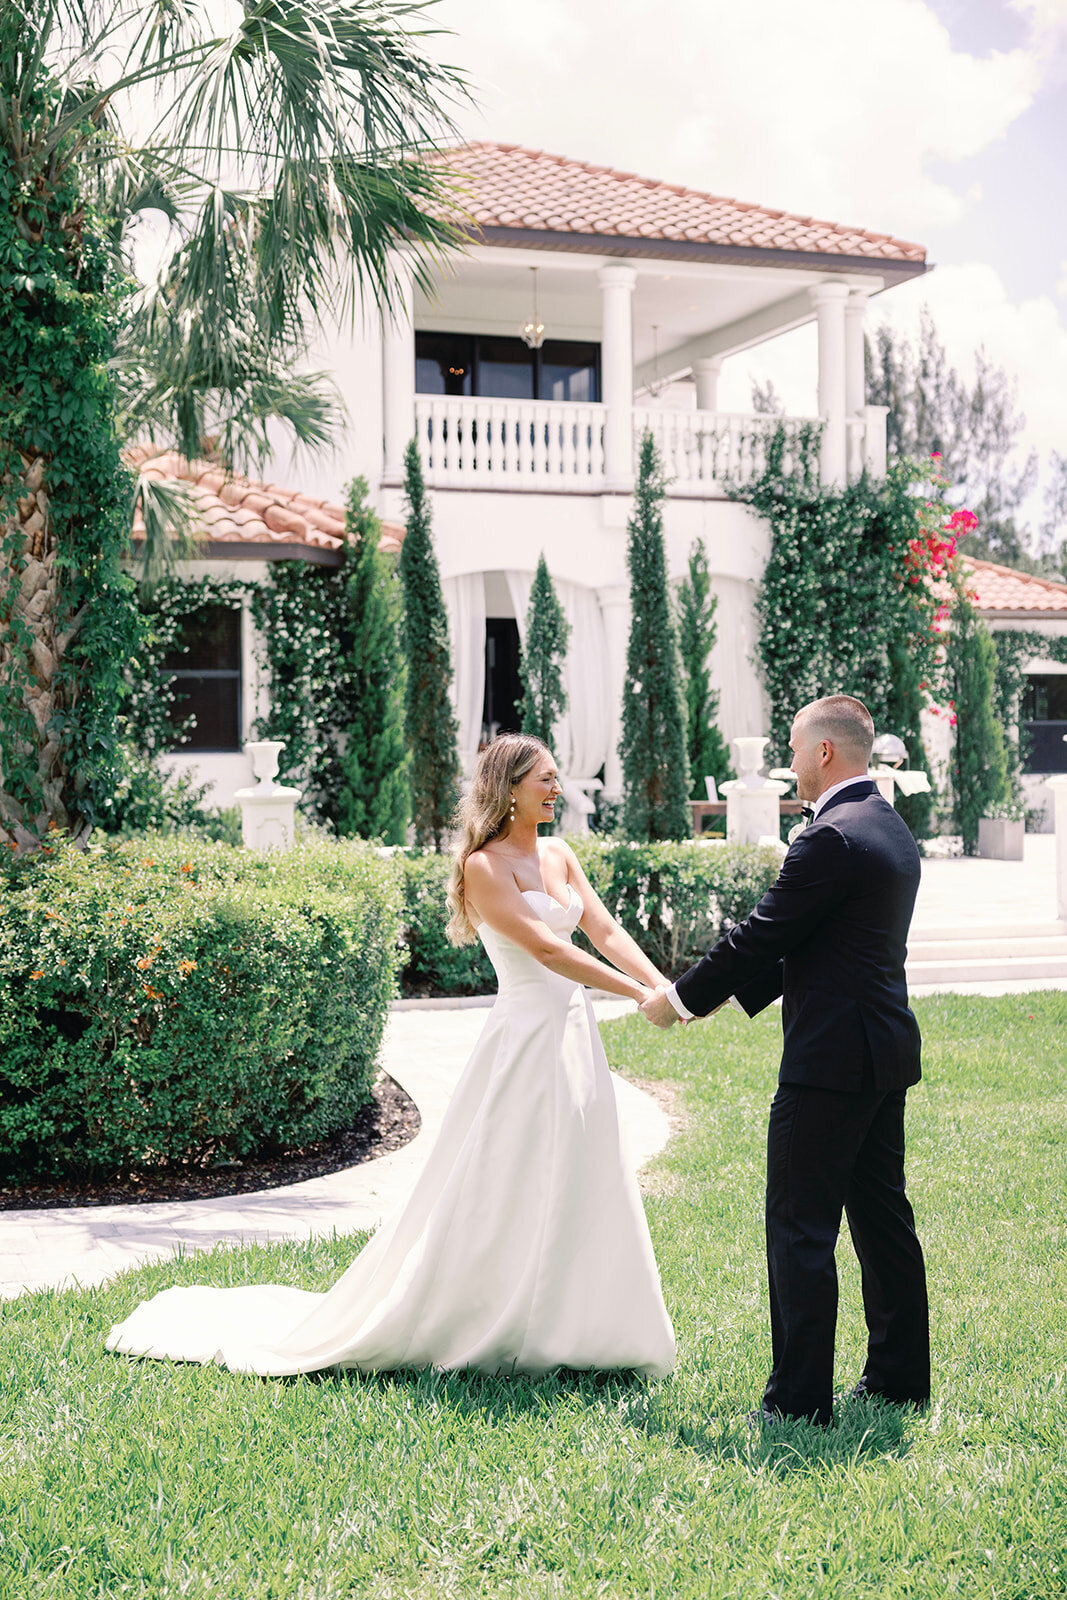 CORNELIA ZAISS PHOTOGRAPHY LEAH + ROBERT'S WEDDING 0192_websize